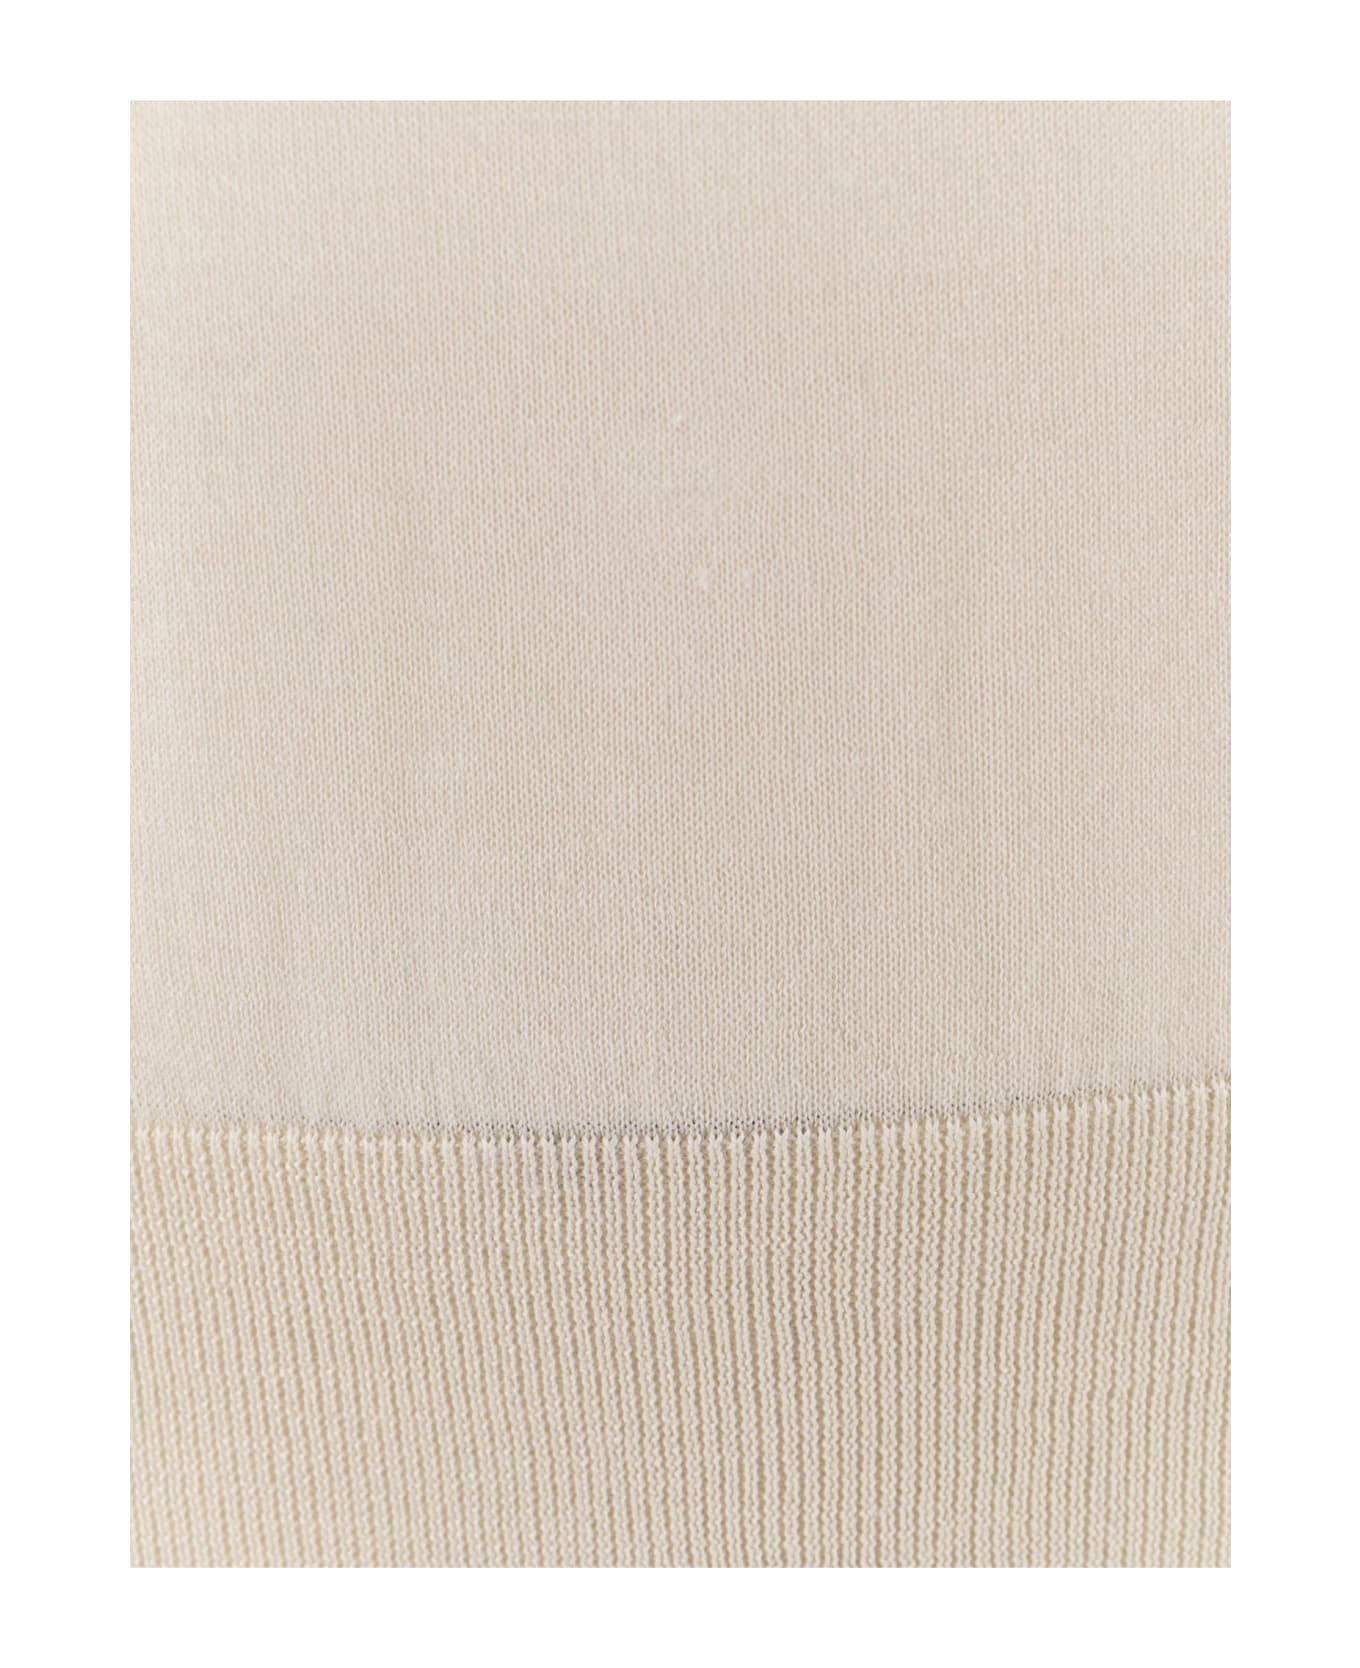 Corneliani Sweater - White ニットウェア